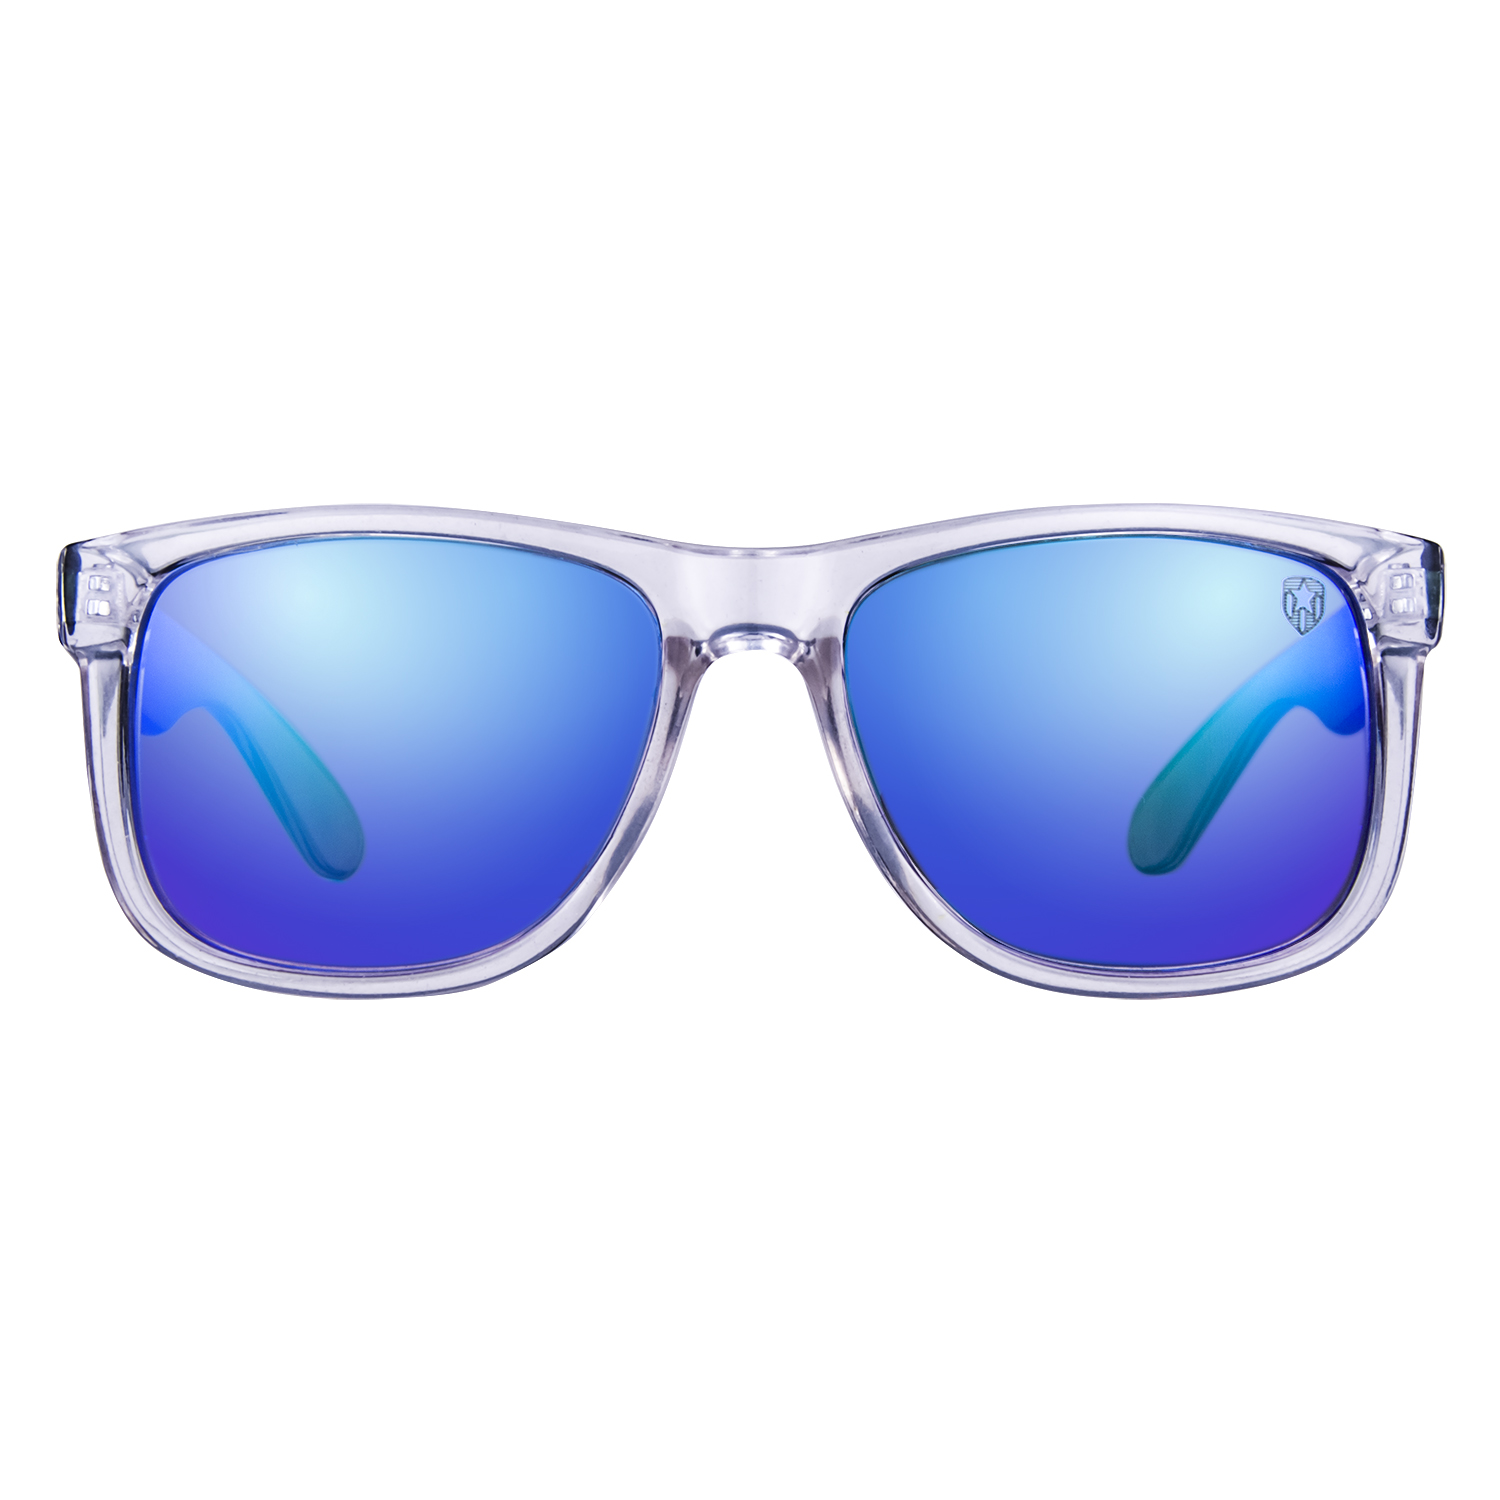 Buy Hawaii – Mirrored Blue Sunglasses - Tom Martin